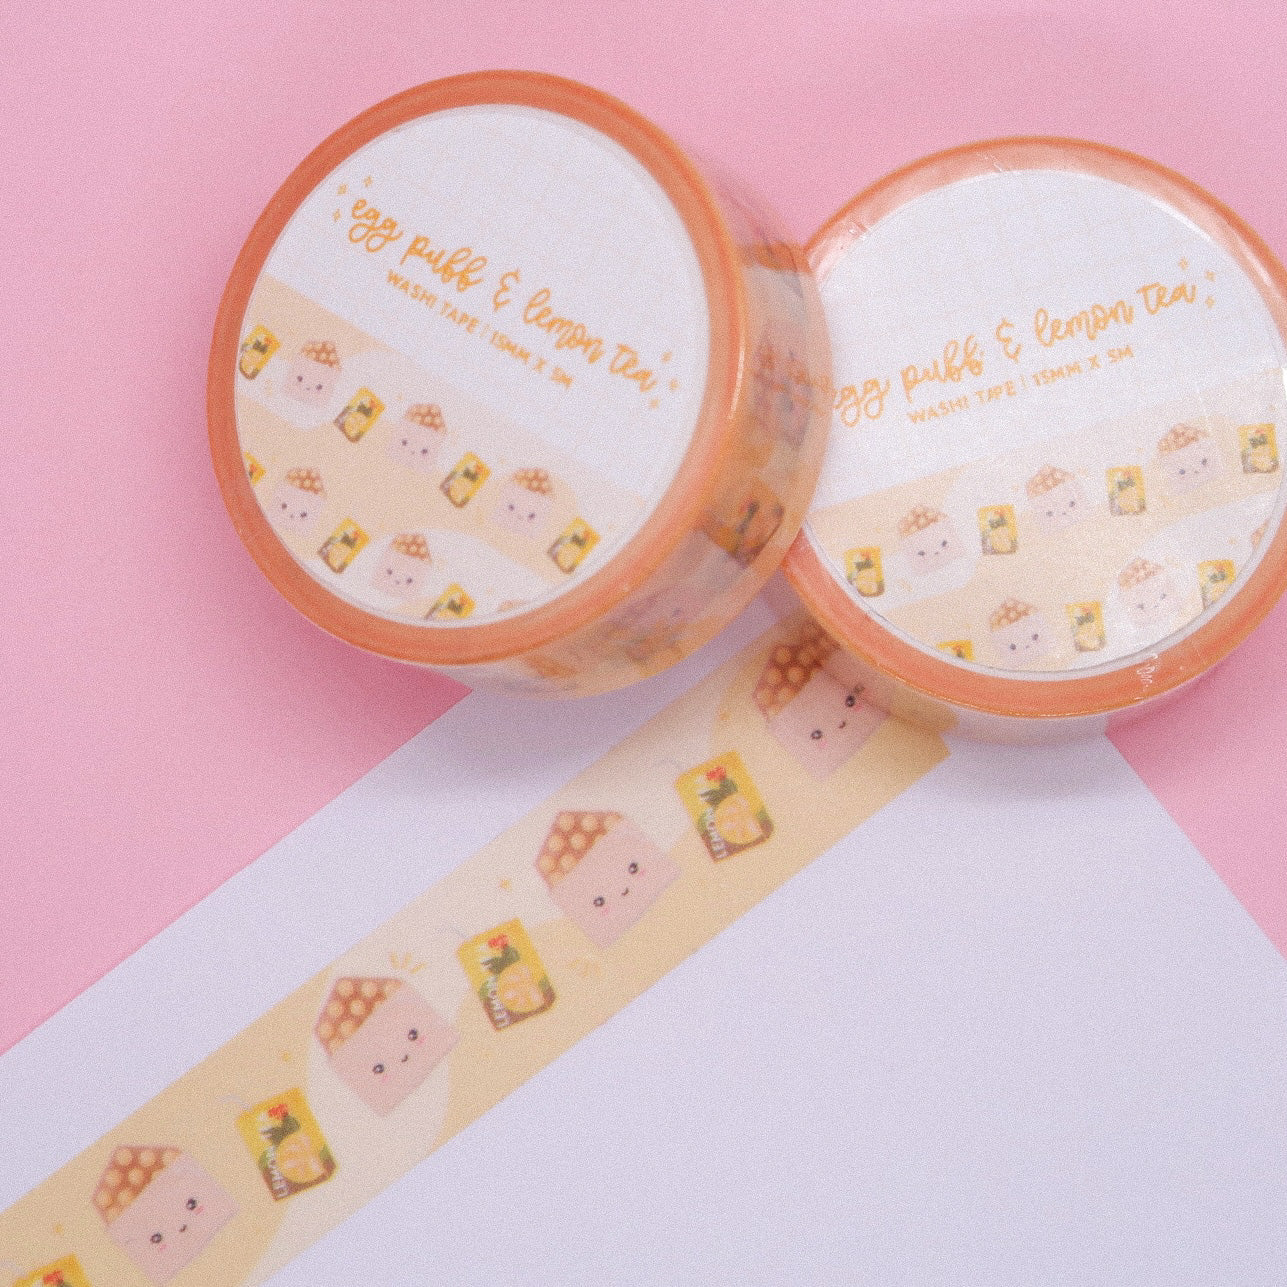 Egg Puff & Lemon Tea - Washi Tape